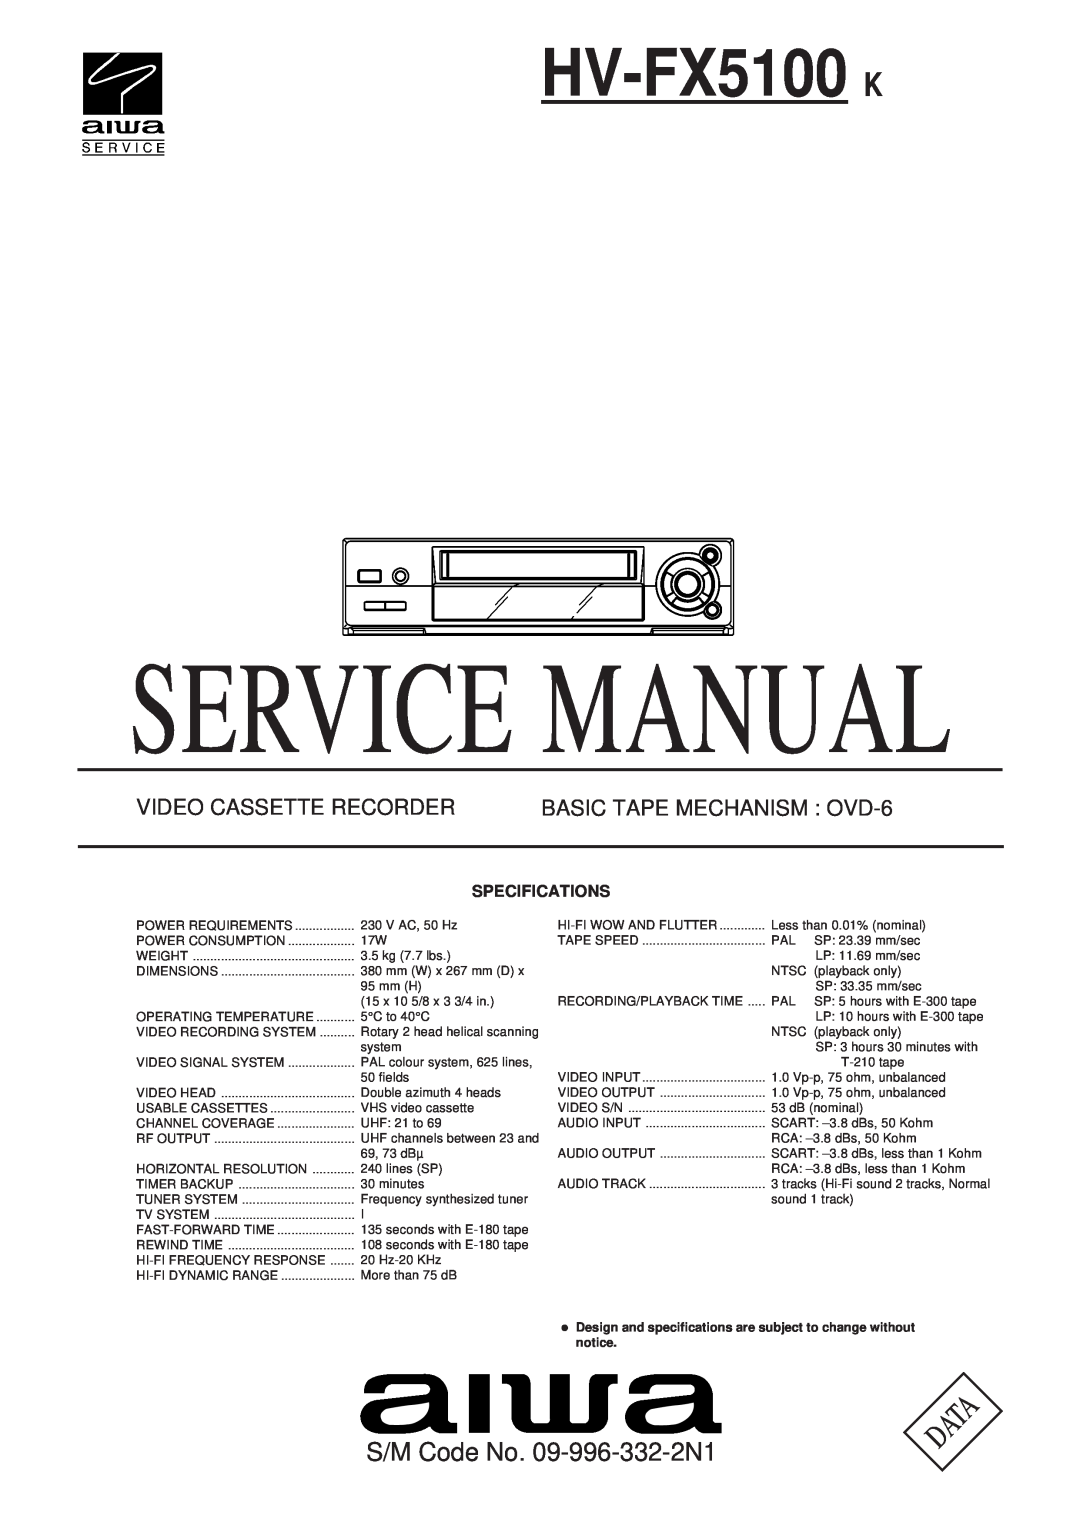 Aiwa service manual S/M Code No. 09-996-332-2N1, Video Cassette Recorder, BASIC TAPE MECHANISM OVD-6, HV-FX5100K 